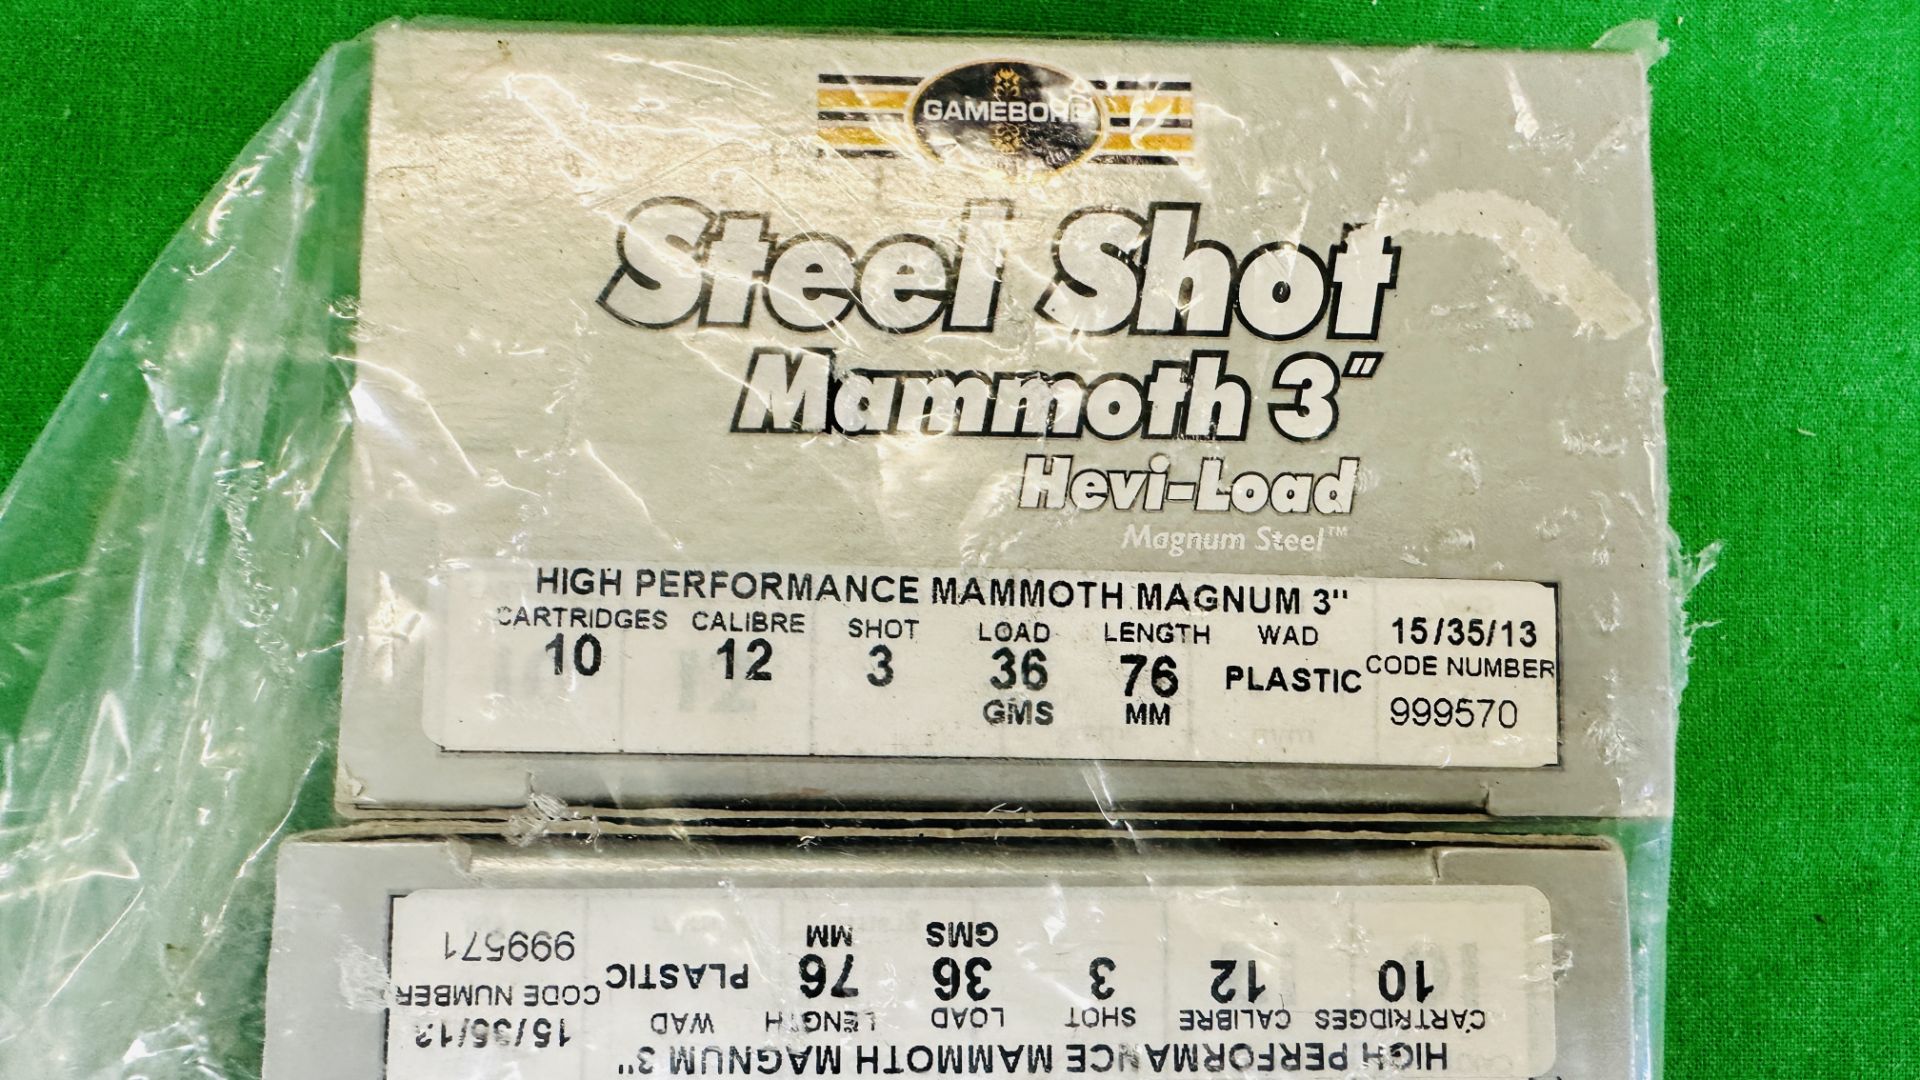 30 X GAMEBORE STEEL SHOT MAMMOTH HEVI LOAD MAGNUM STEEL 3" 36GRM 3 SHOT CARTRIDGES - (TO BE - Bild 2 aus 3